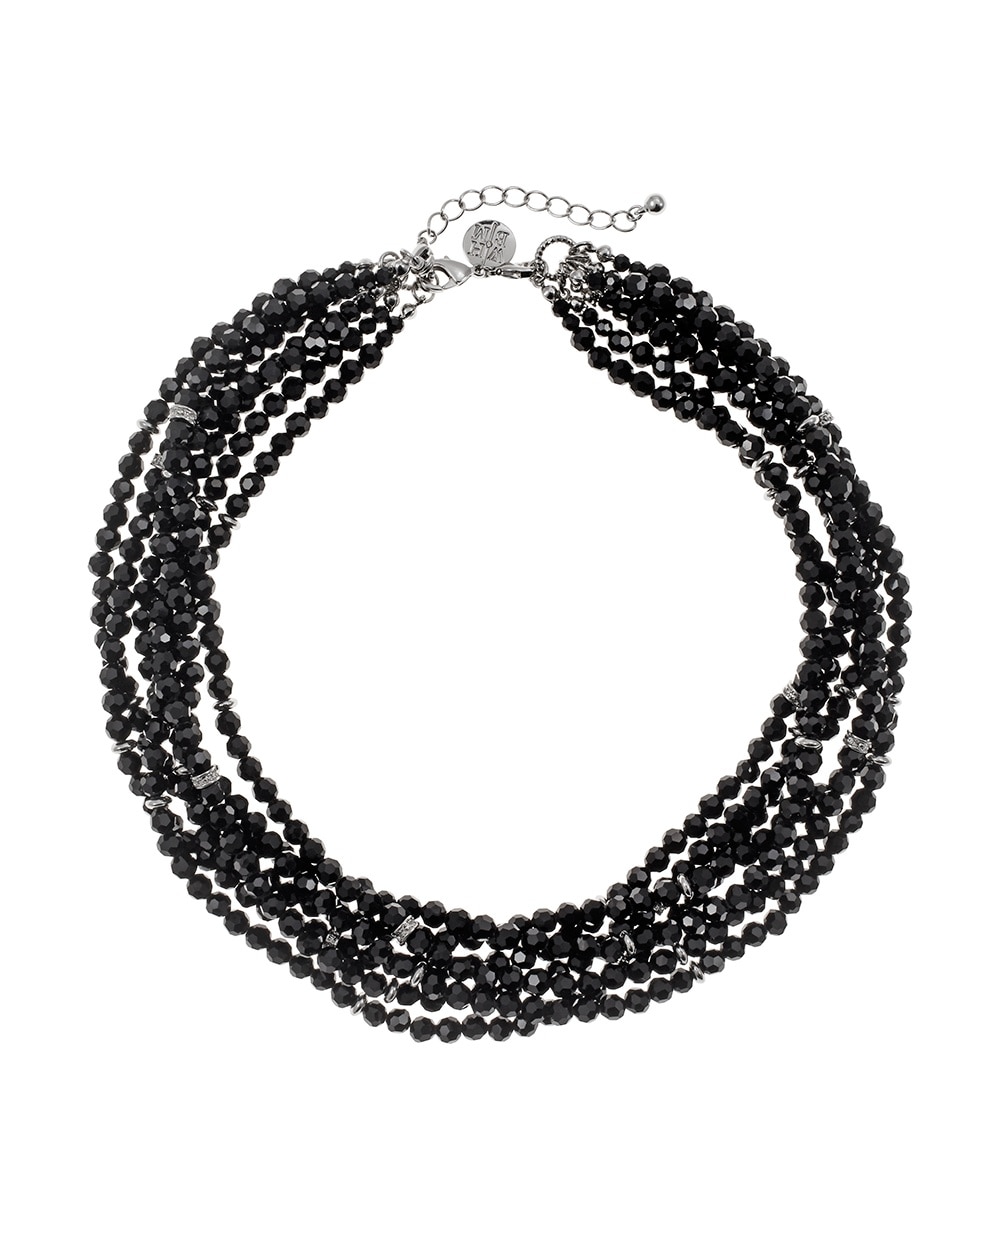 Black Bead Multi Row Necklace - Shop Women's Jewelry - Necklaces ...